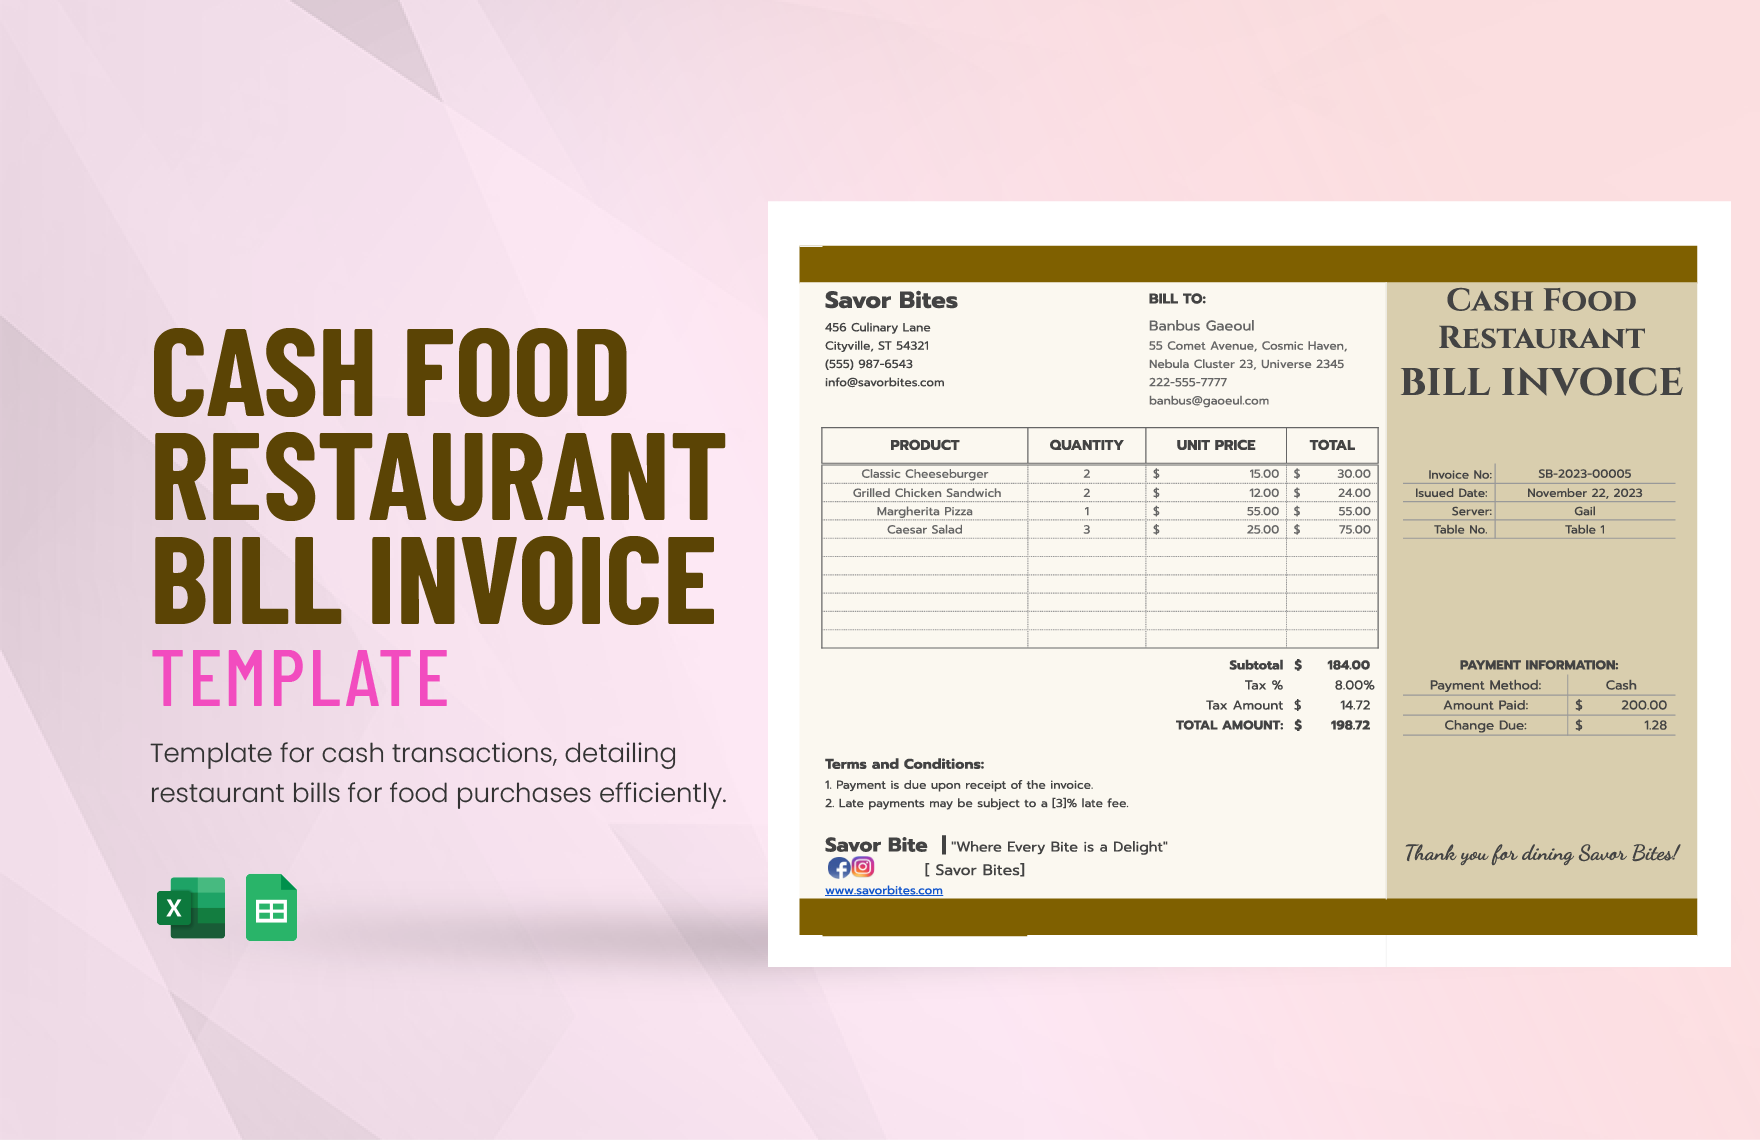 Cash Food Restaurant Bill Invoice Template